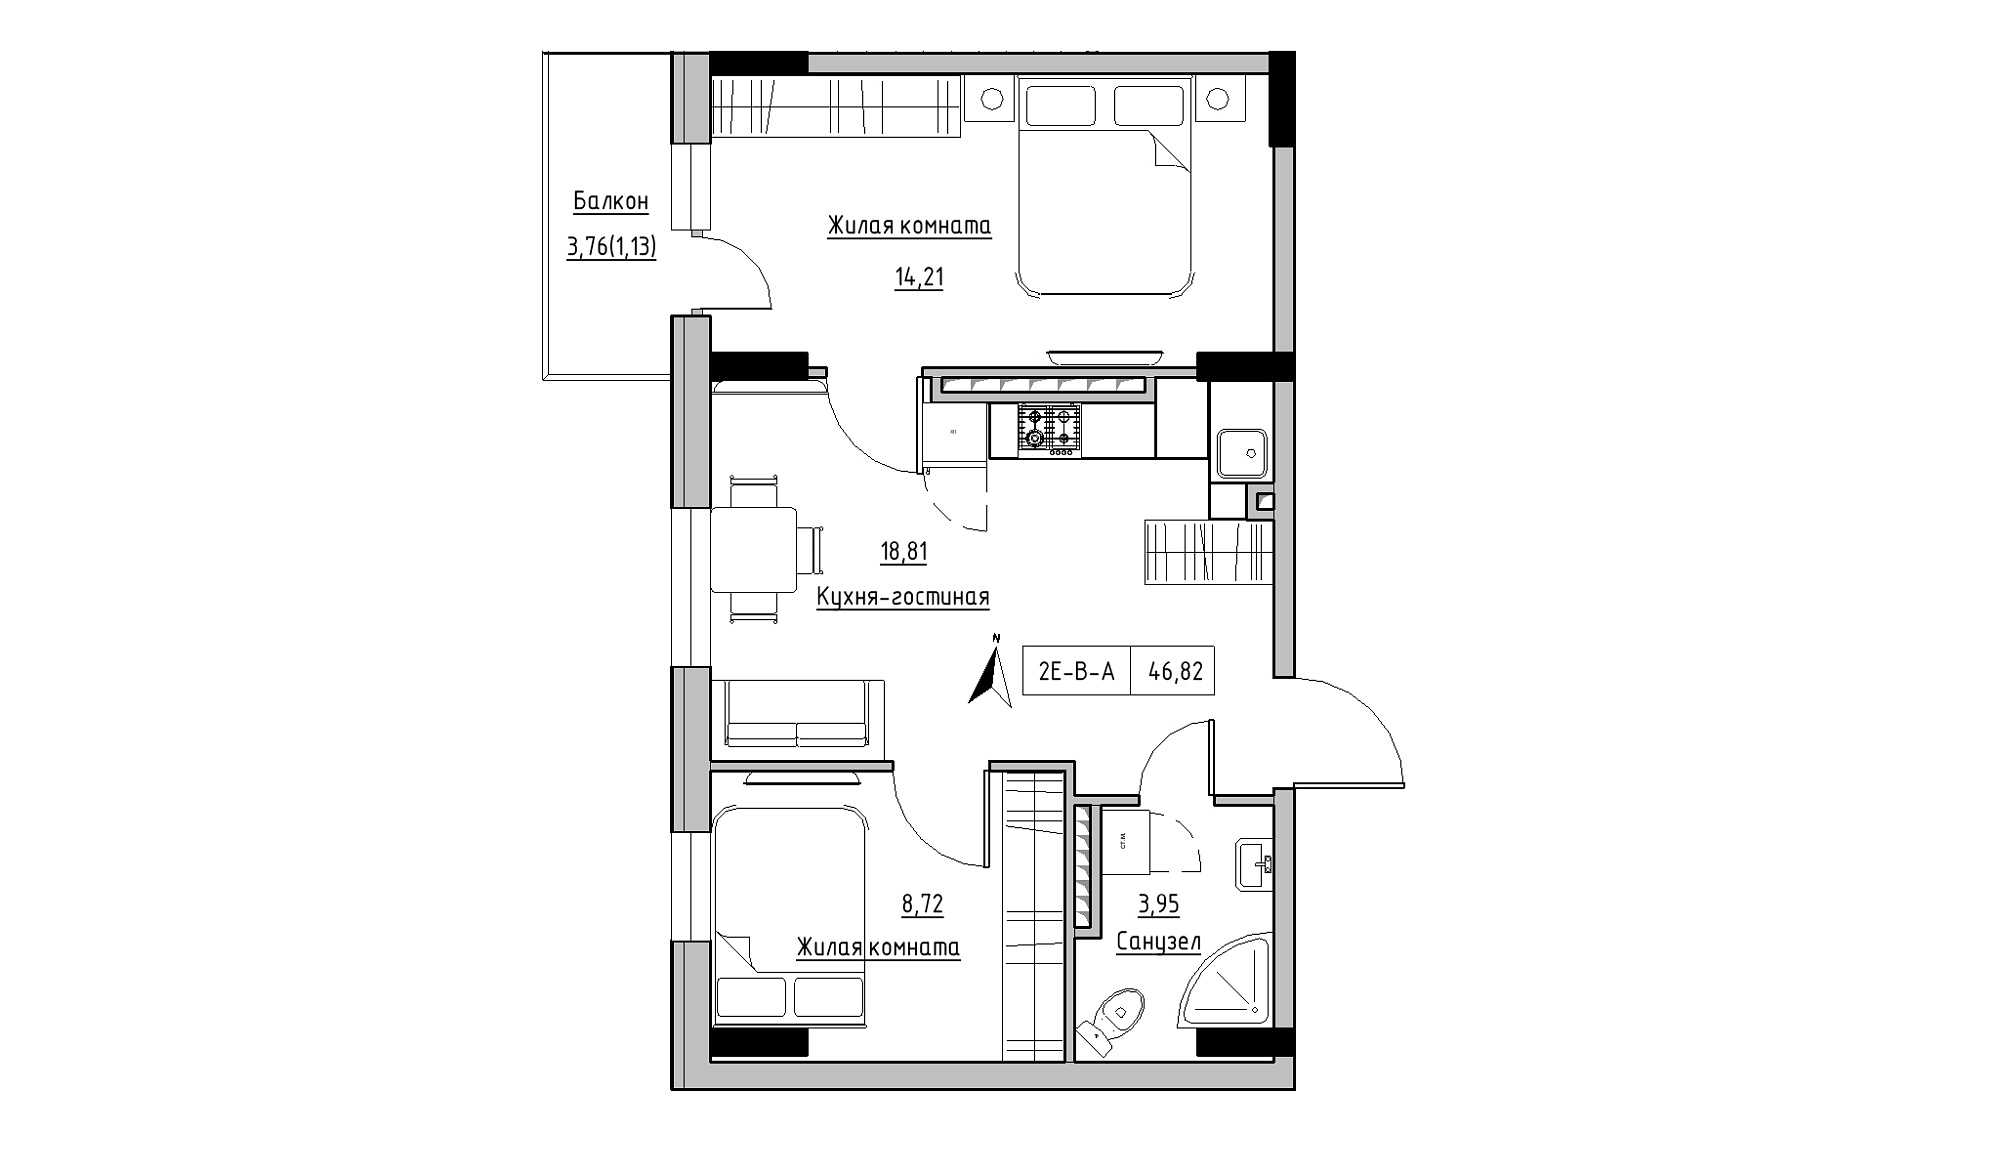 Planning 2-rm flats area 46.82m2, KS-025-06/0003.